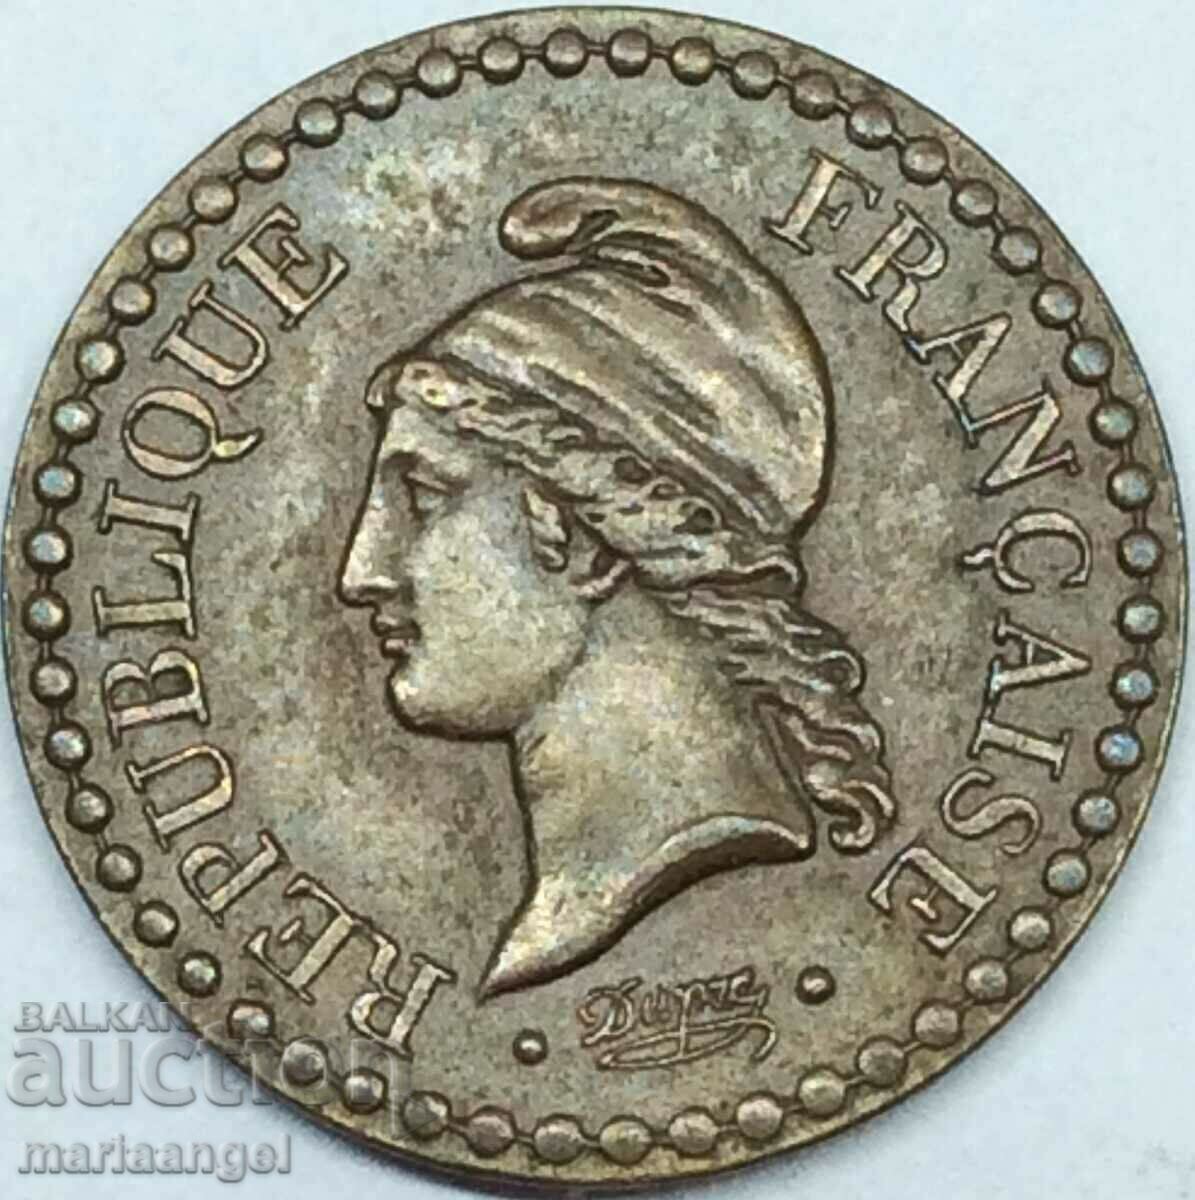 France 1 centime 1849 bronze - rare